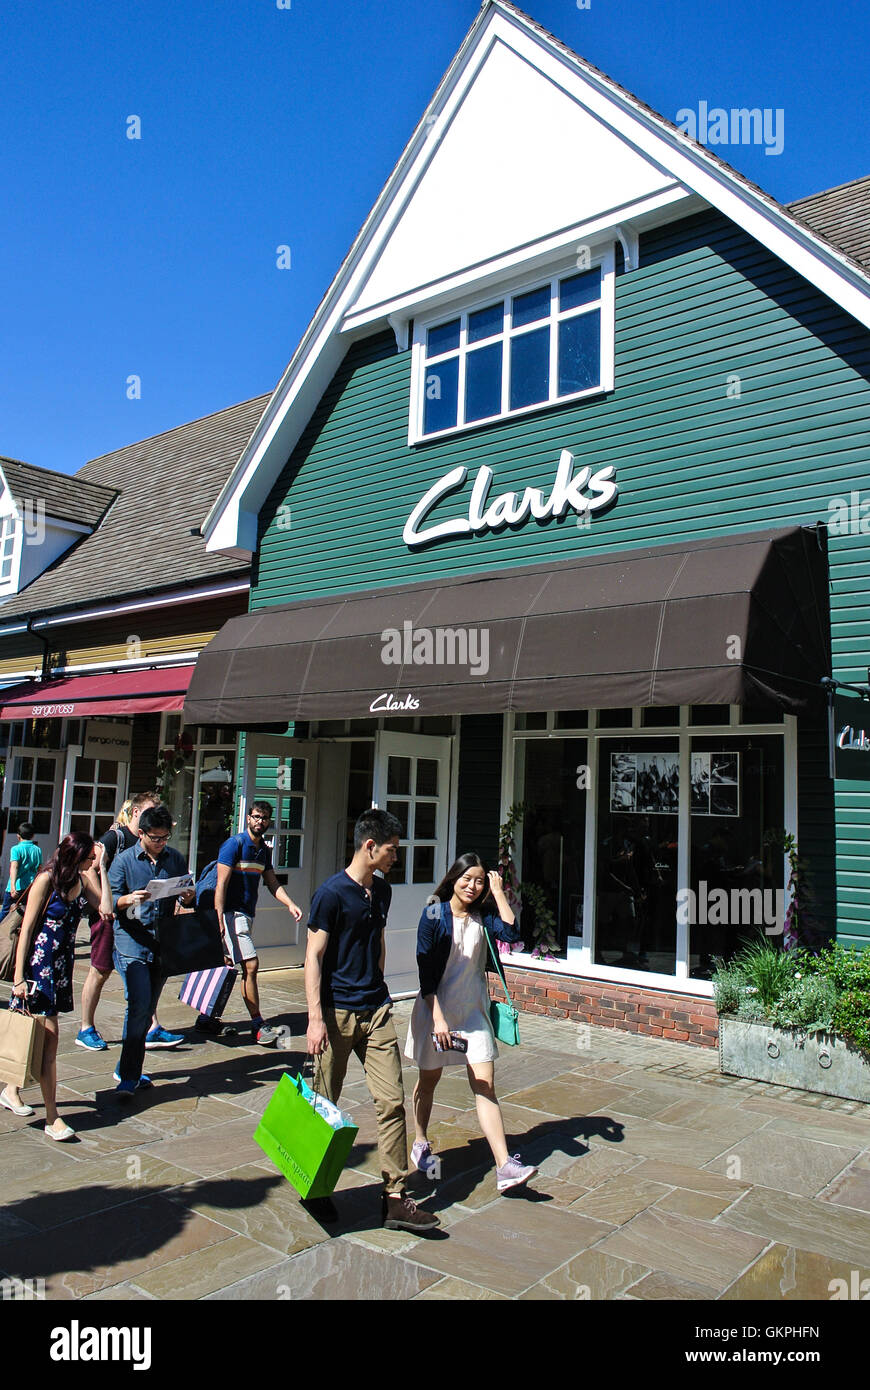 clark village shops